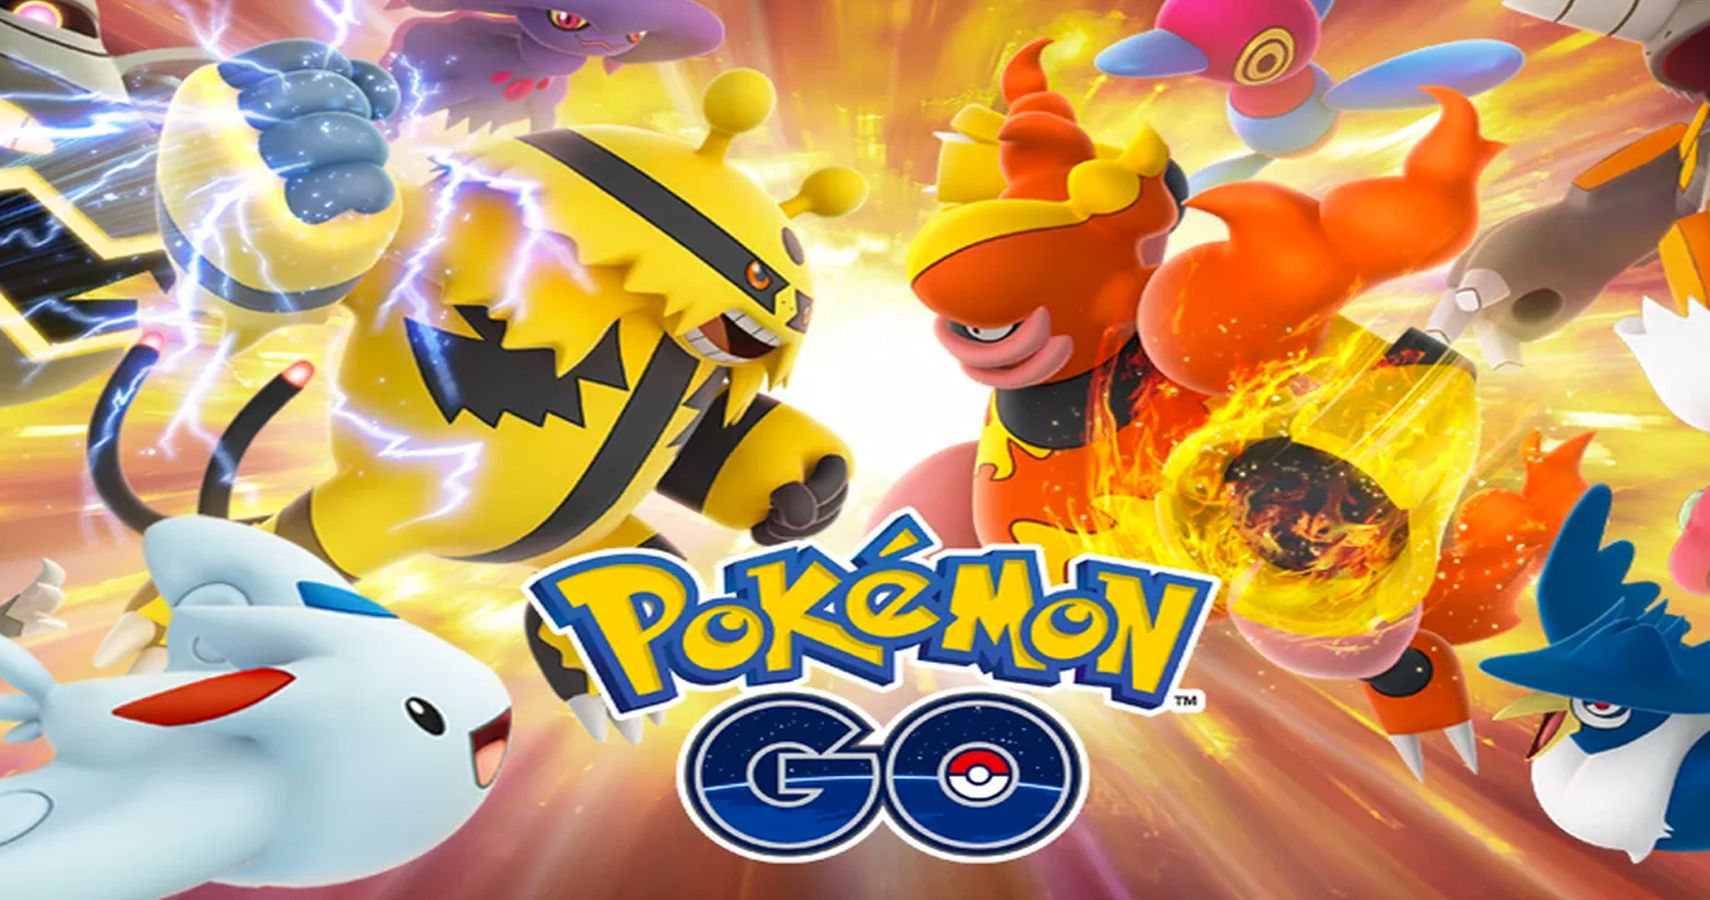 Pokémon GO Online Multiplayer Coming Next Year